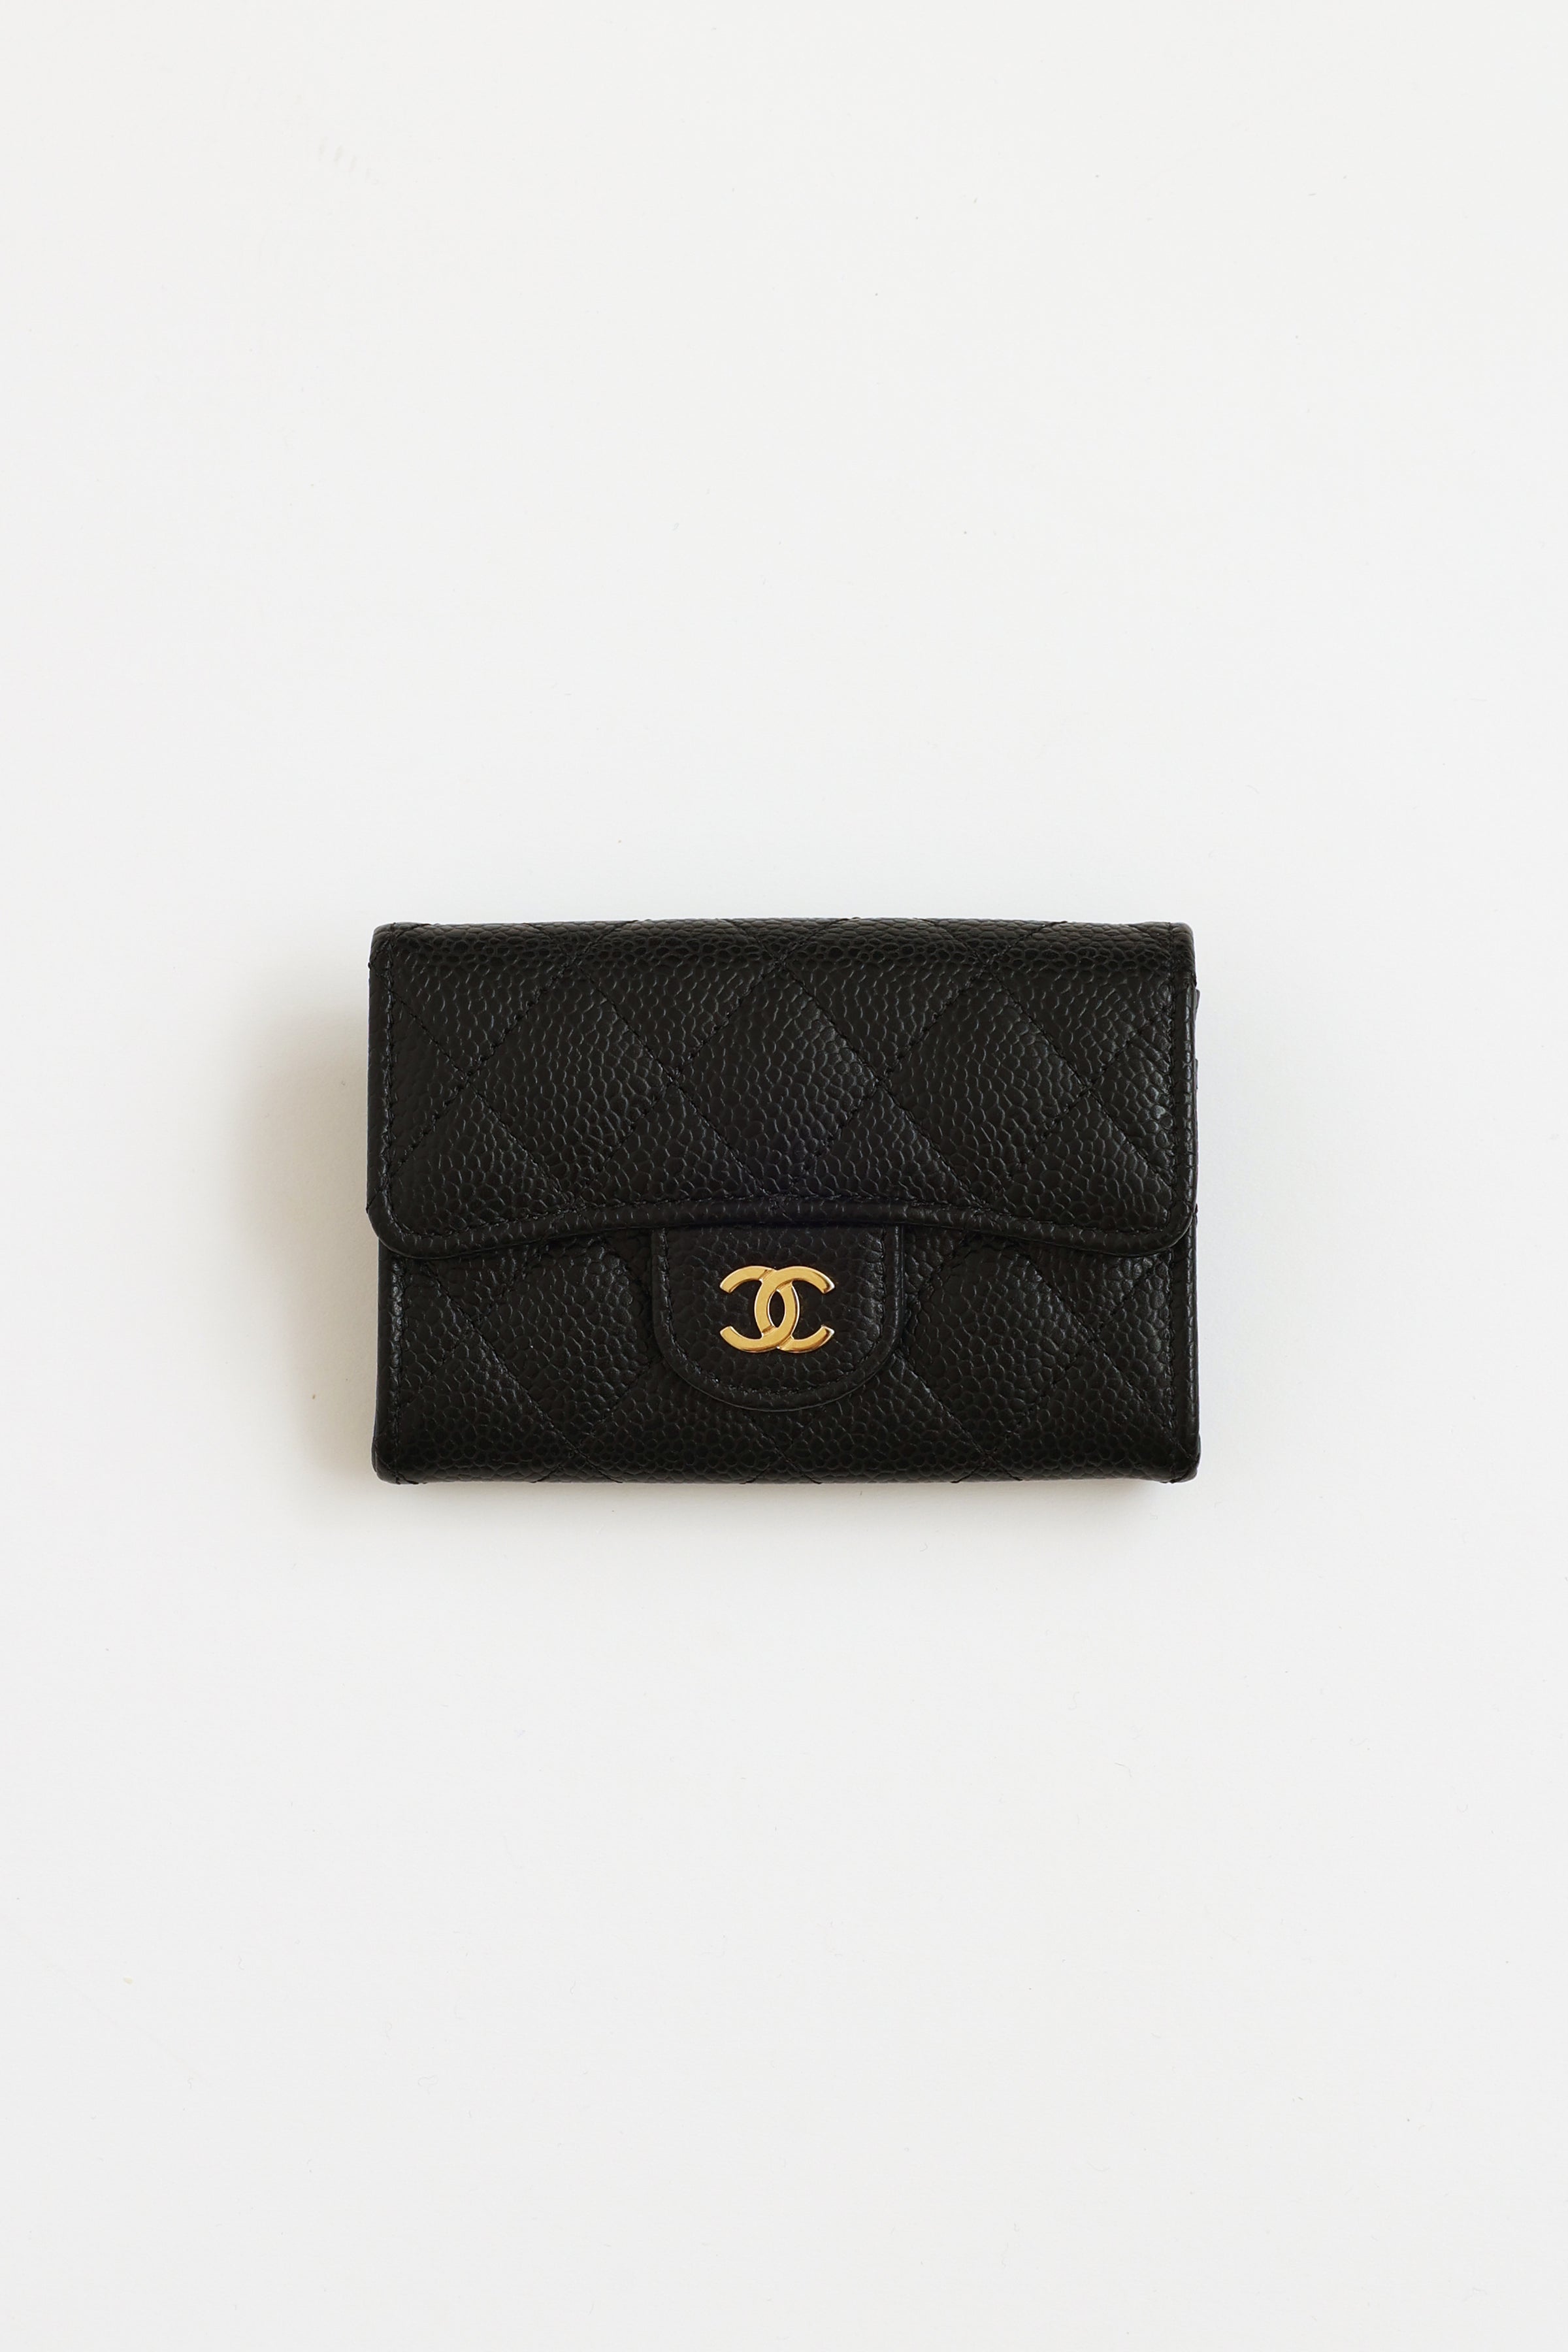 Chanel CLASSIC SMALL FLAP WALLET Grained Calfskin  GoldTone Metal Black   Hàng hiệu 11 HVip